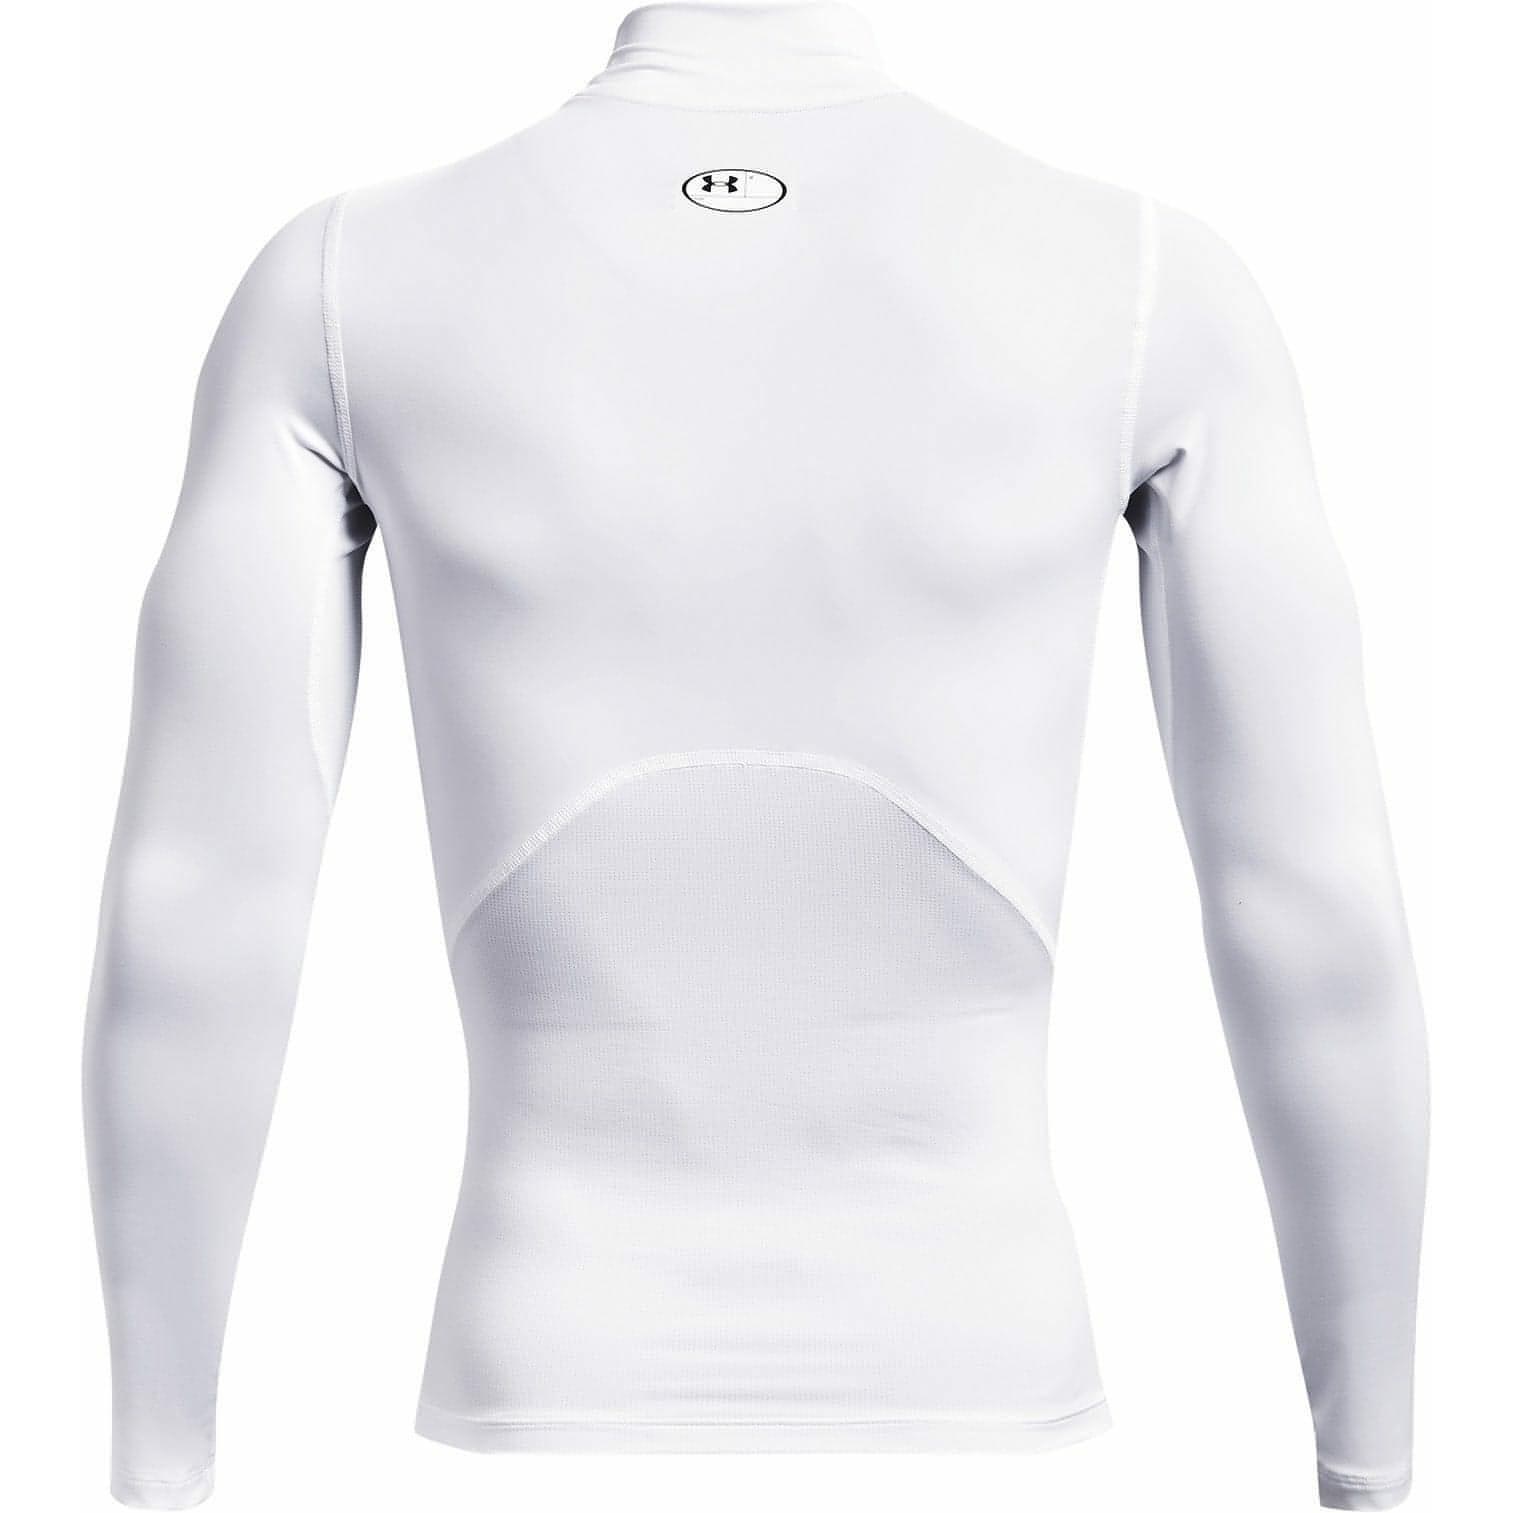 Under Armour HeatGear Mock Long Sleeve Mens Training Top - White - Start Fitness